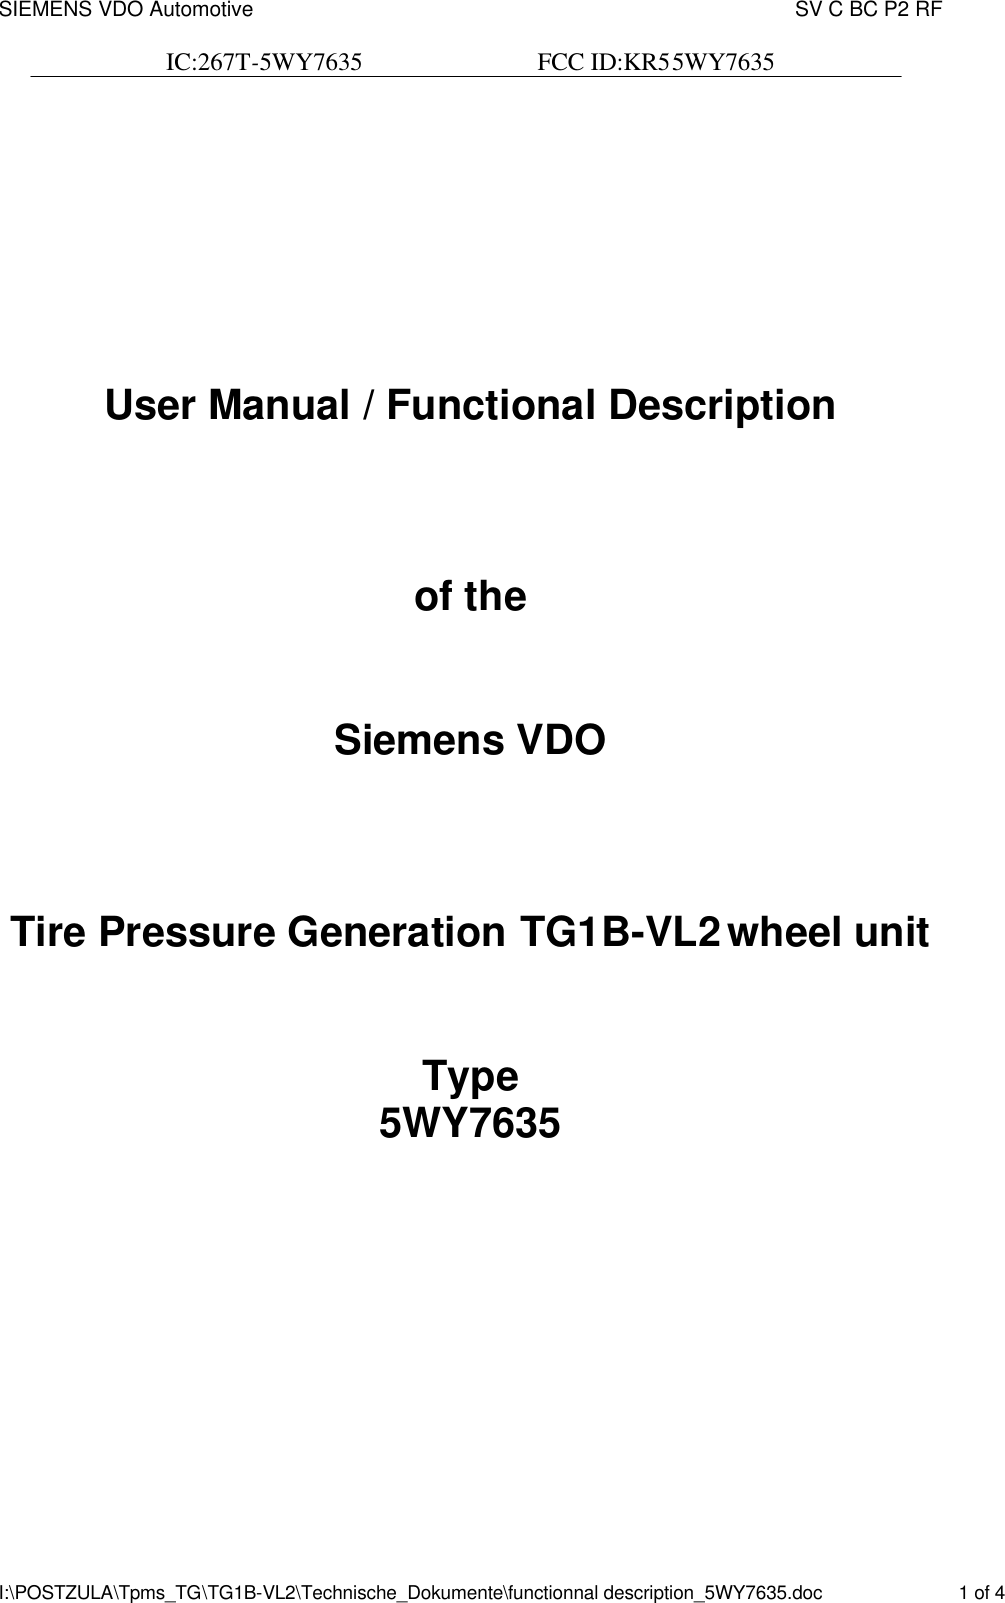 SIEMENS VDO Automotive    SV C BC P2 RF  IC:267T-5WY7635                            FCC ID:KR55WY7635   I:\POSTZULA\Tpms_TG\TG1B-VL2\Technische_Dokumente\functionnal description_5WY7635.doc    1 of 4       User Manual / Functional Description    of the   Siemens VDO    Tire Pressure Generation TG1B-VL2 wheel unit   Type  5WY7635            